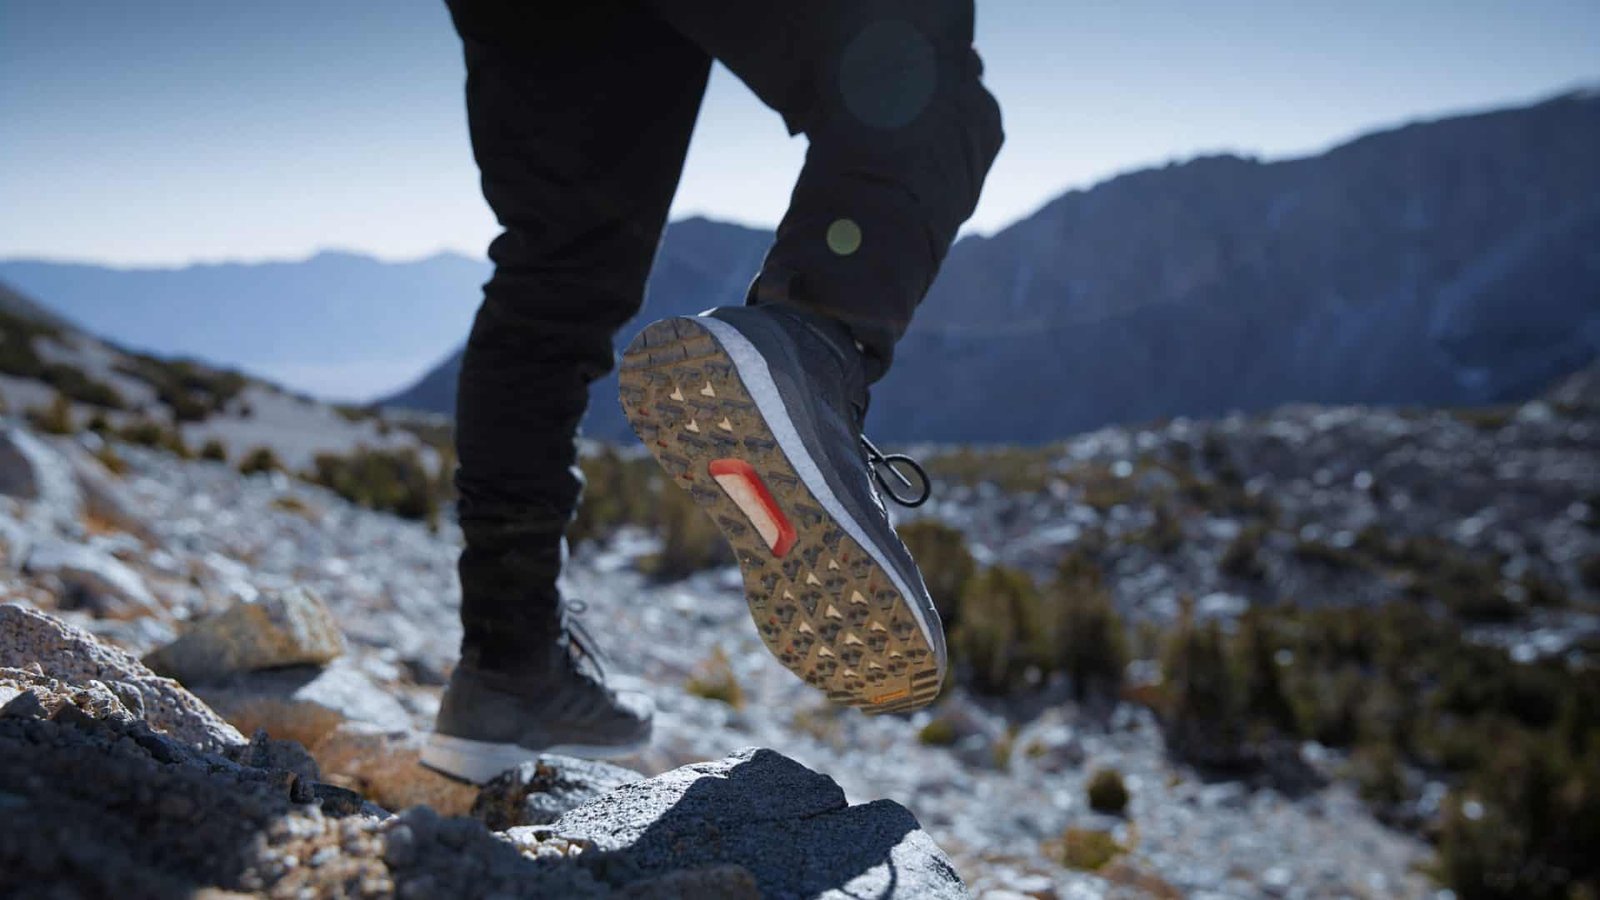 adidas outdoor terrex campaign featuring musician Diplo